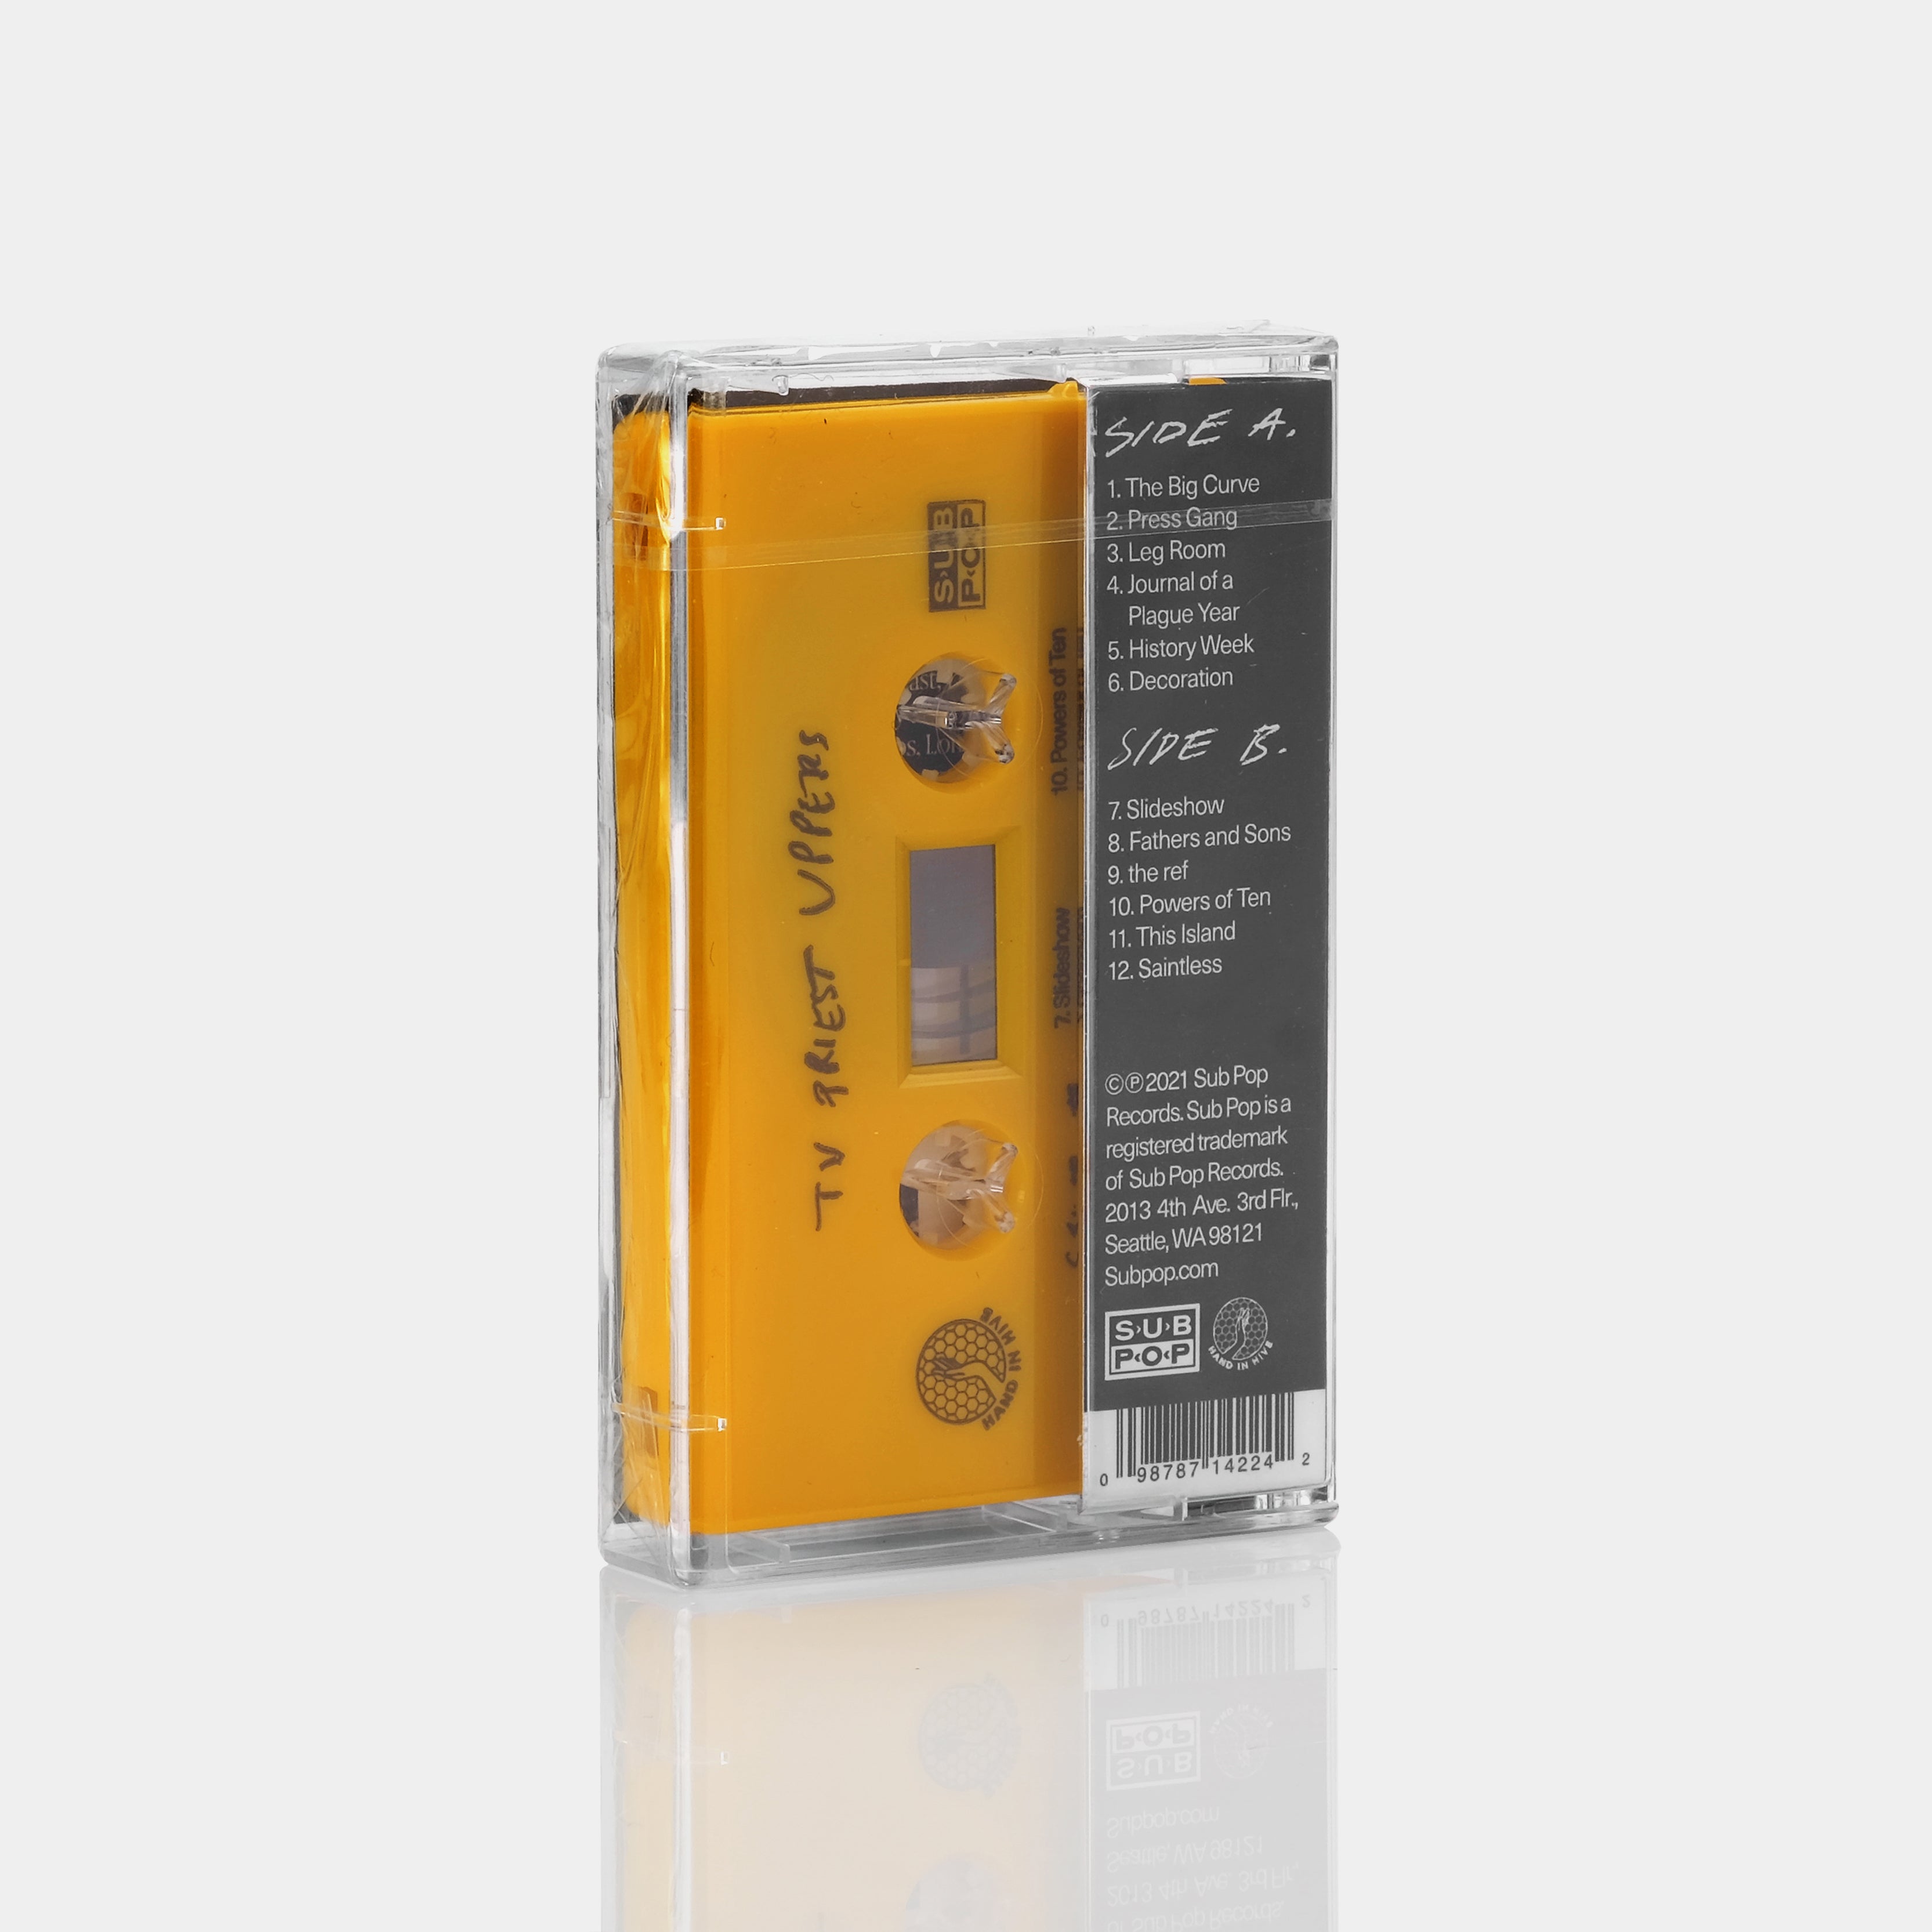 TV Priest - Uppers Cassette Tape